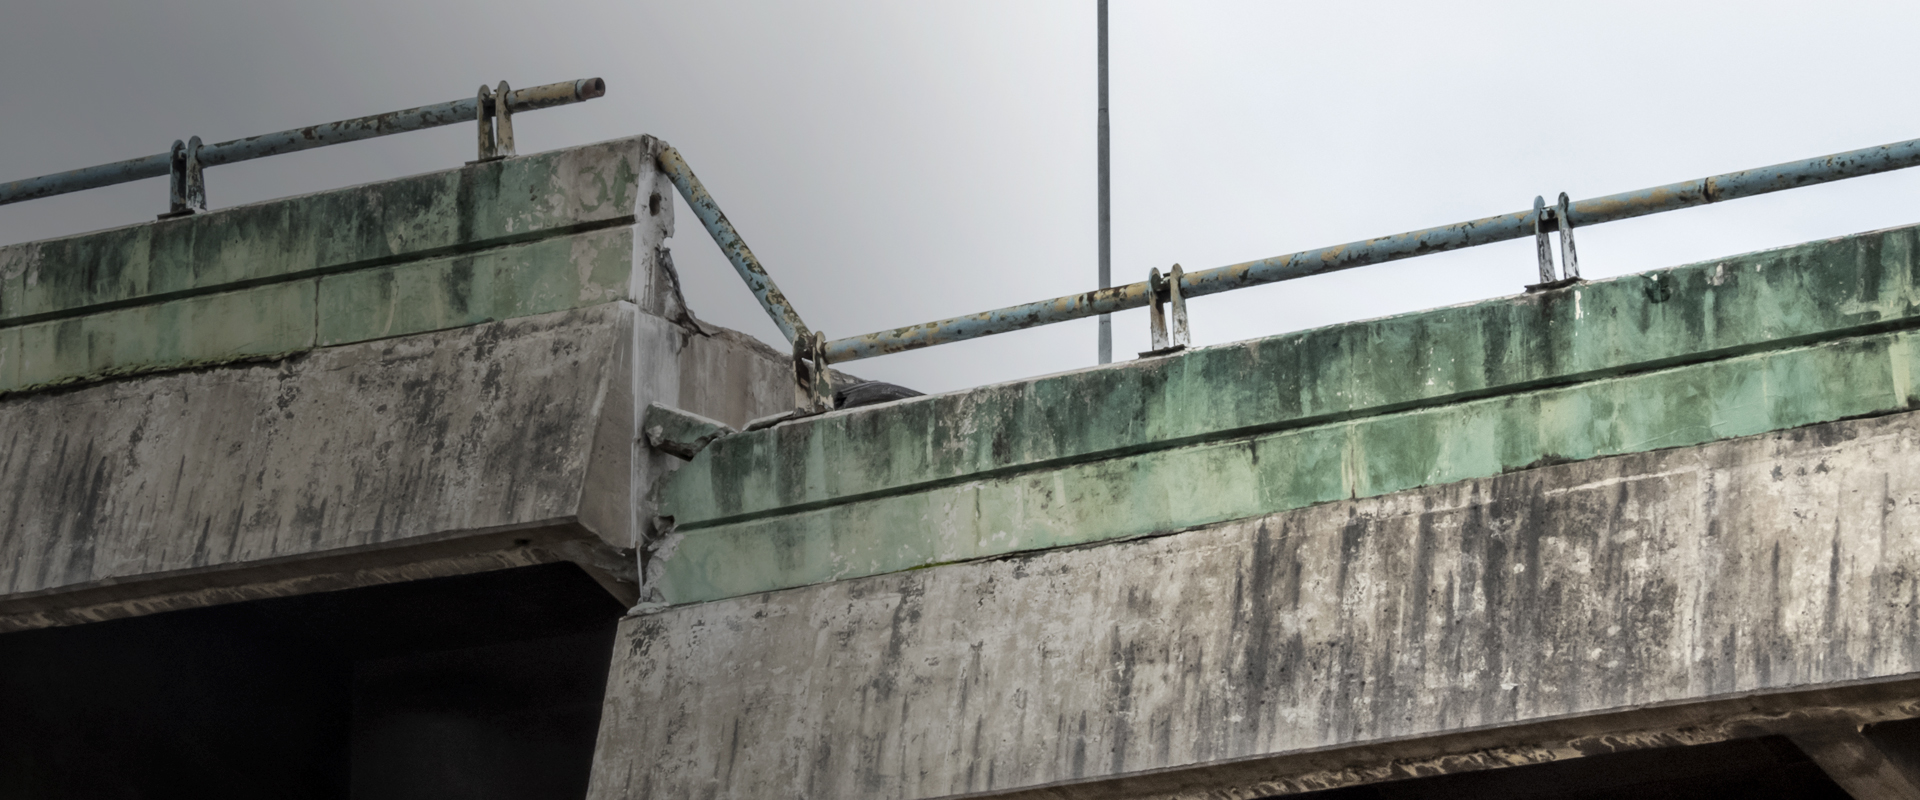 Réparation au lieu de la démolition du pont Jaguaré à São Paulo / © AdobeStock/ALF_Ribeiro